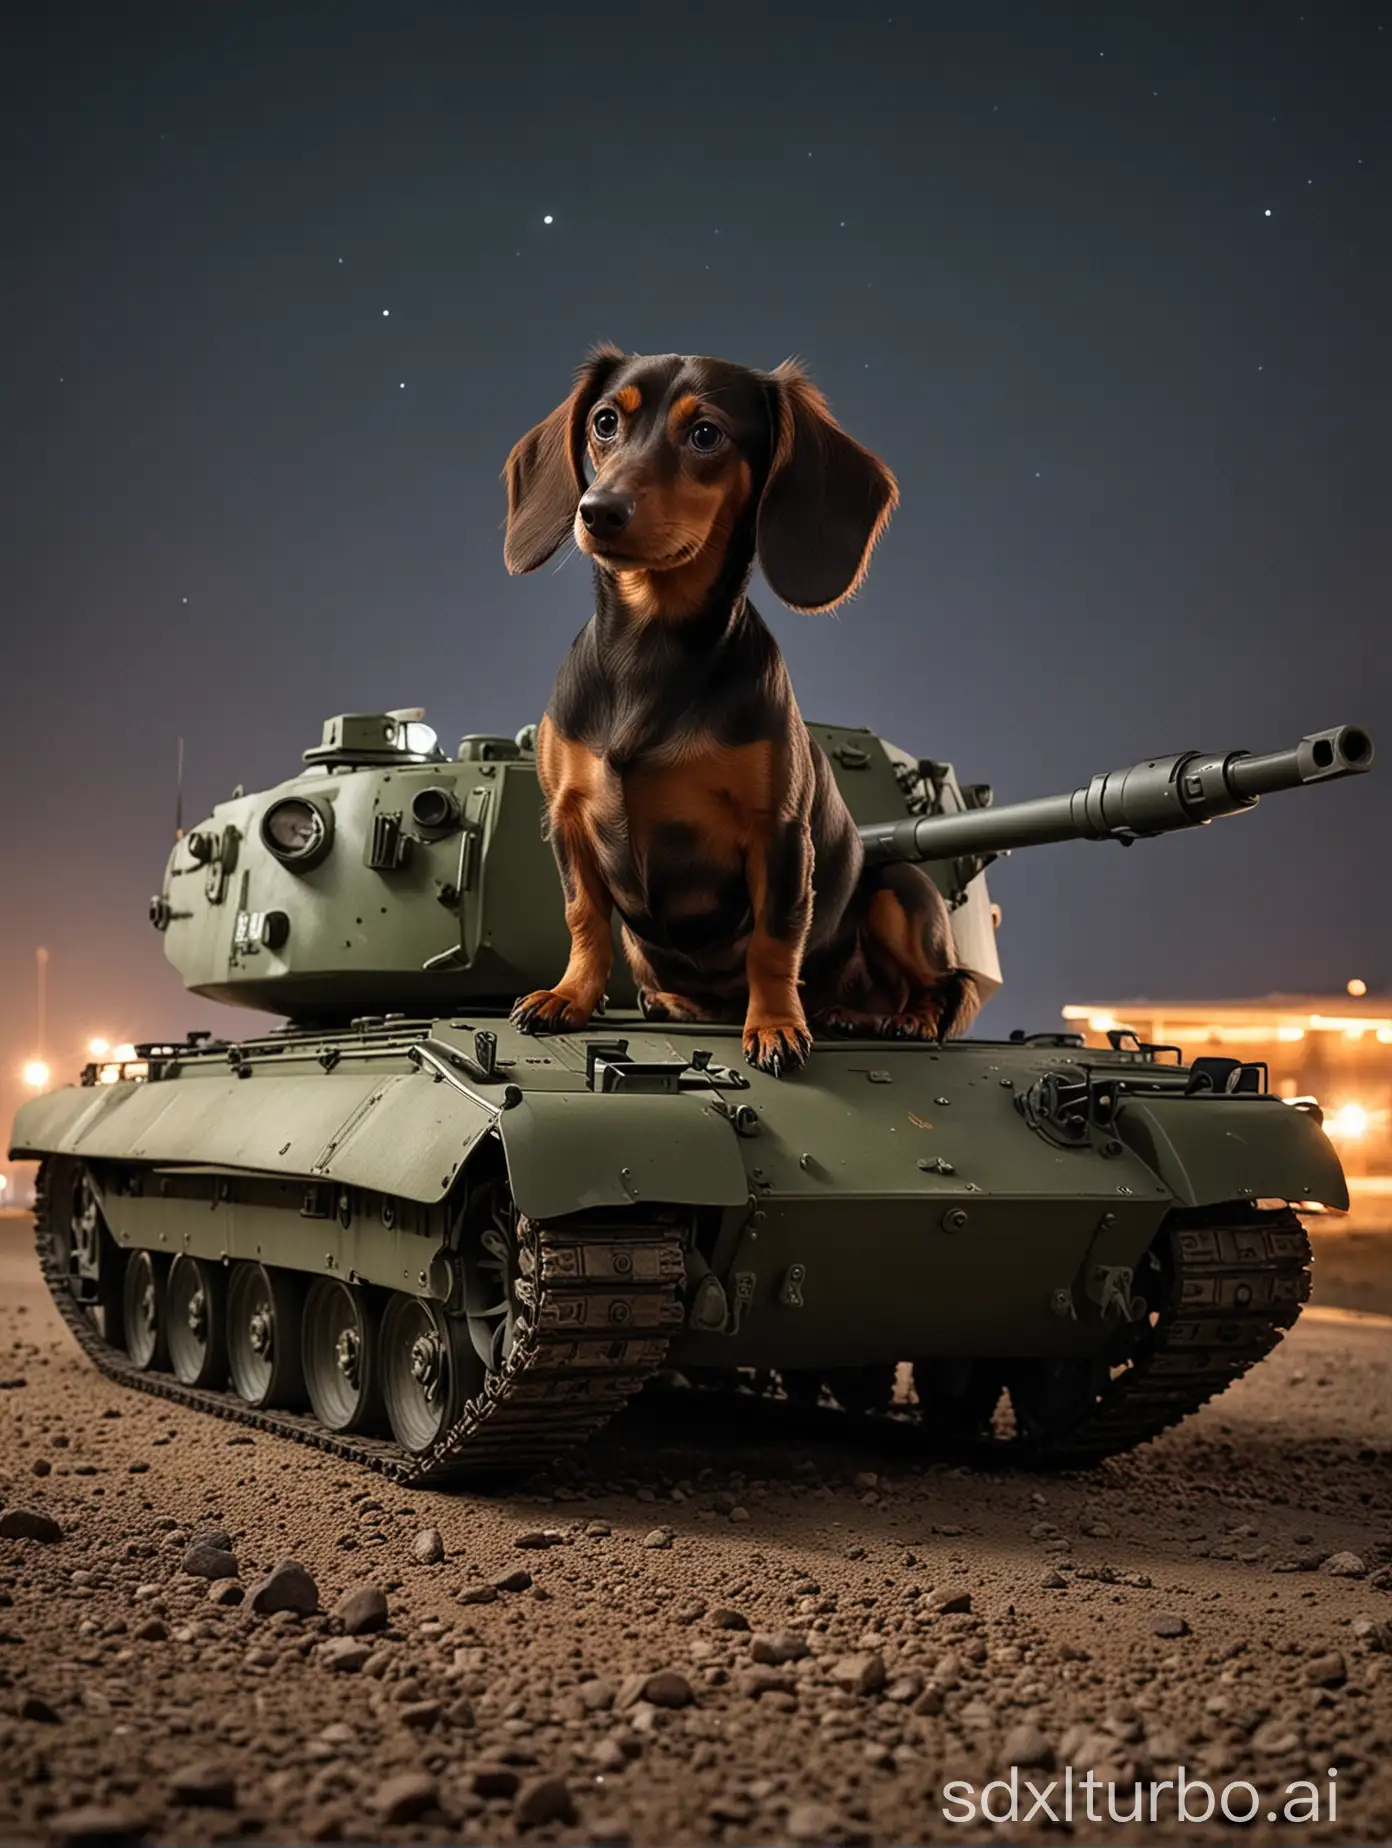 Dachshund on a modern tank at night